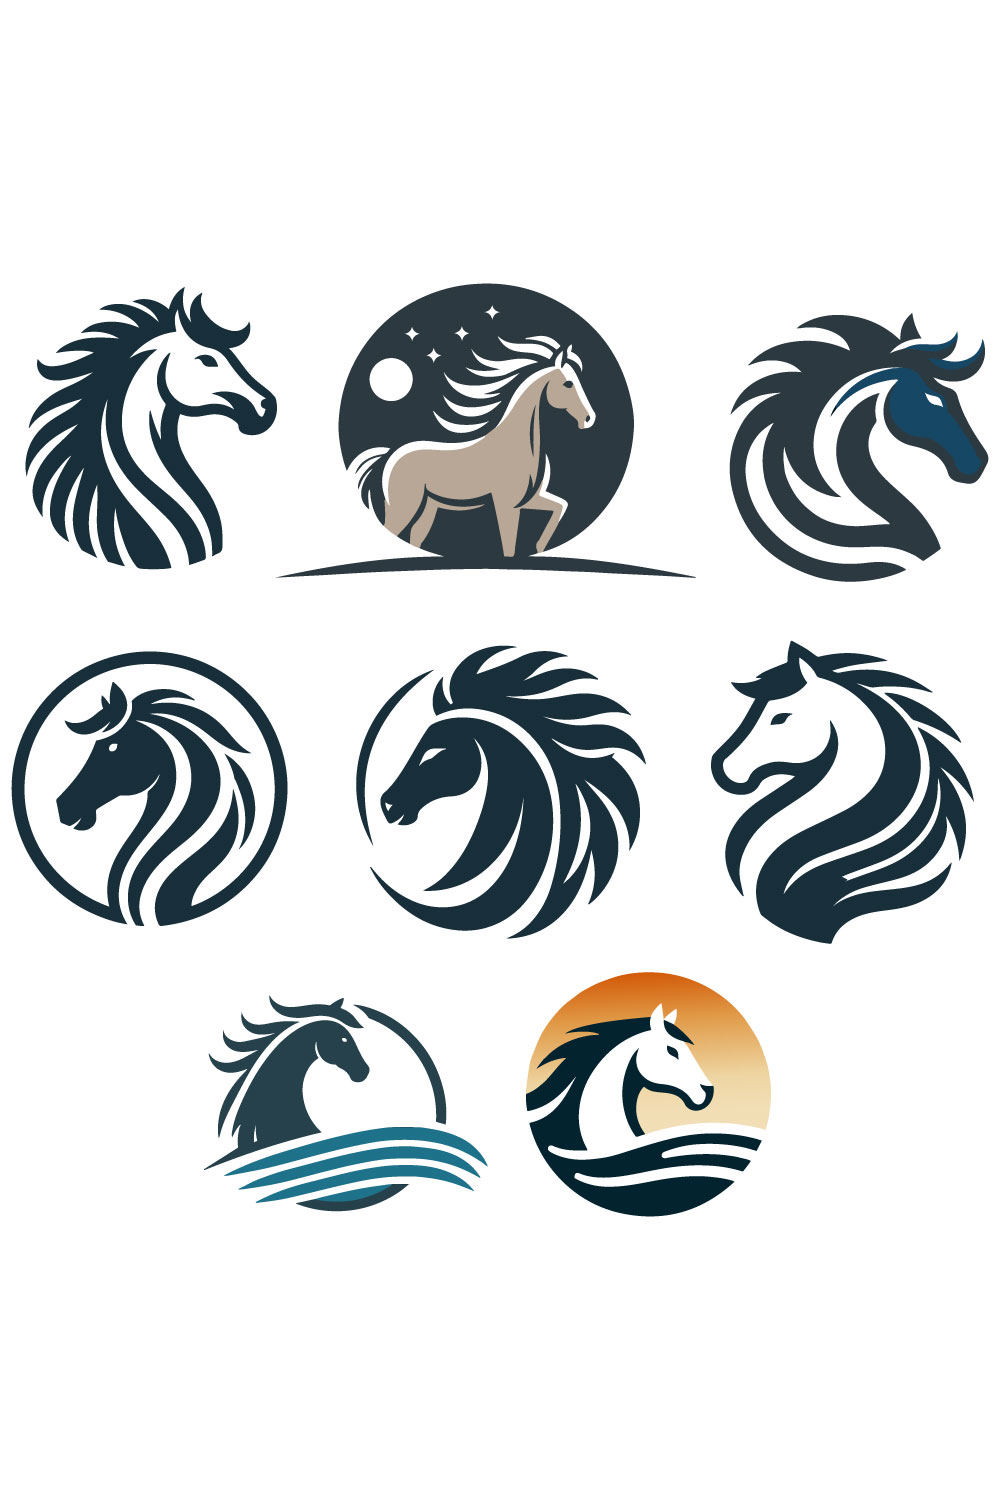 8 Horse Logos Vector Illustration pinterest preview image.